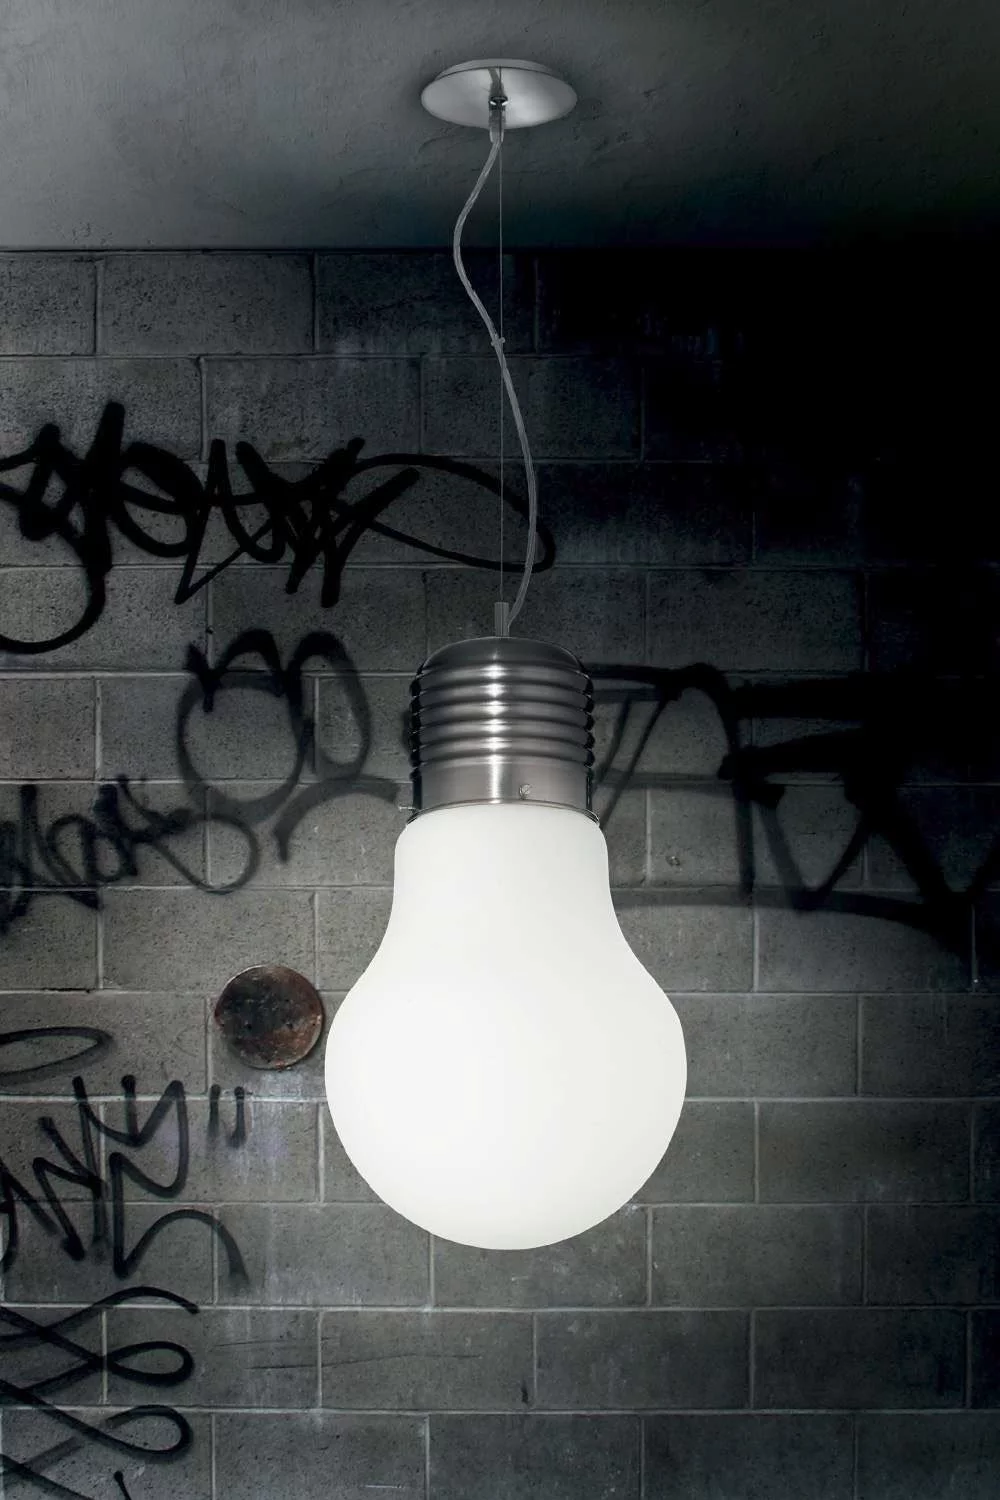   
                        Люстра IDEAL LUX  (Италия) 43017    
                         в стиле Модерн.  
                        Тип источника света: светодиодная лампа, сменная.                         Форма: Шар, Лампочка.                         Цвета плафонов и подвесок: Белый.                         Материал: Стекло.                          фото 2